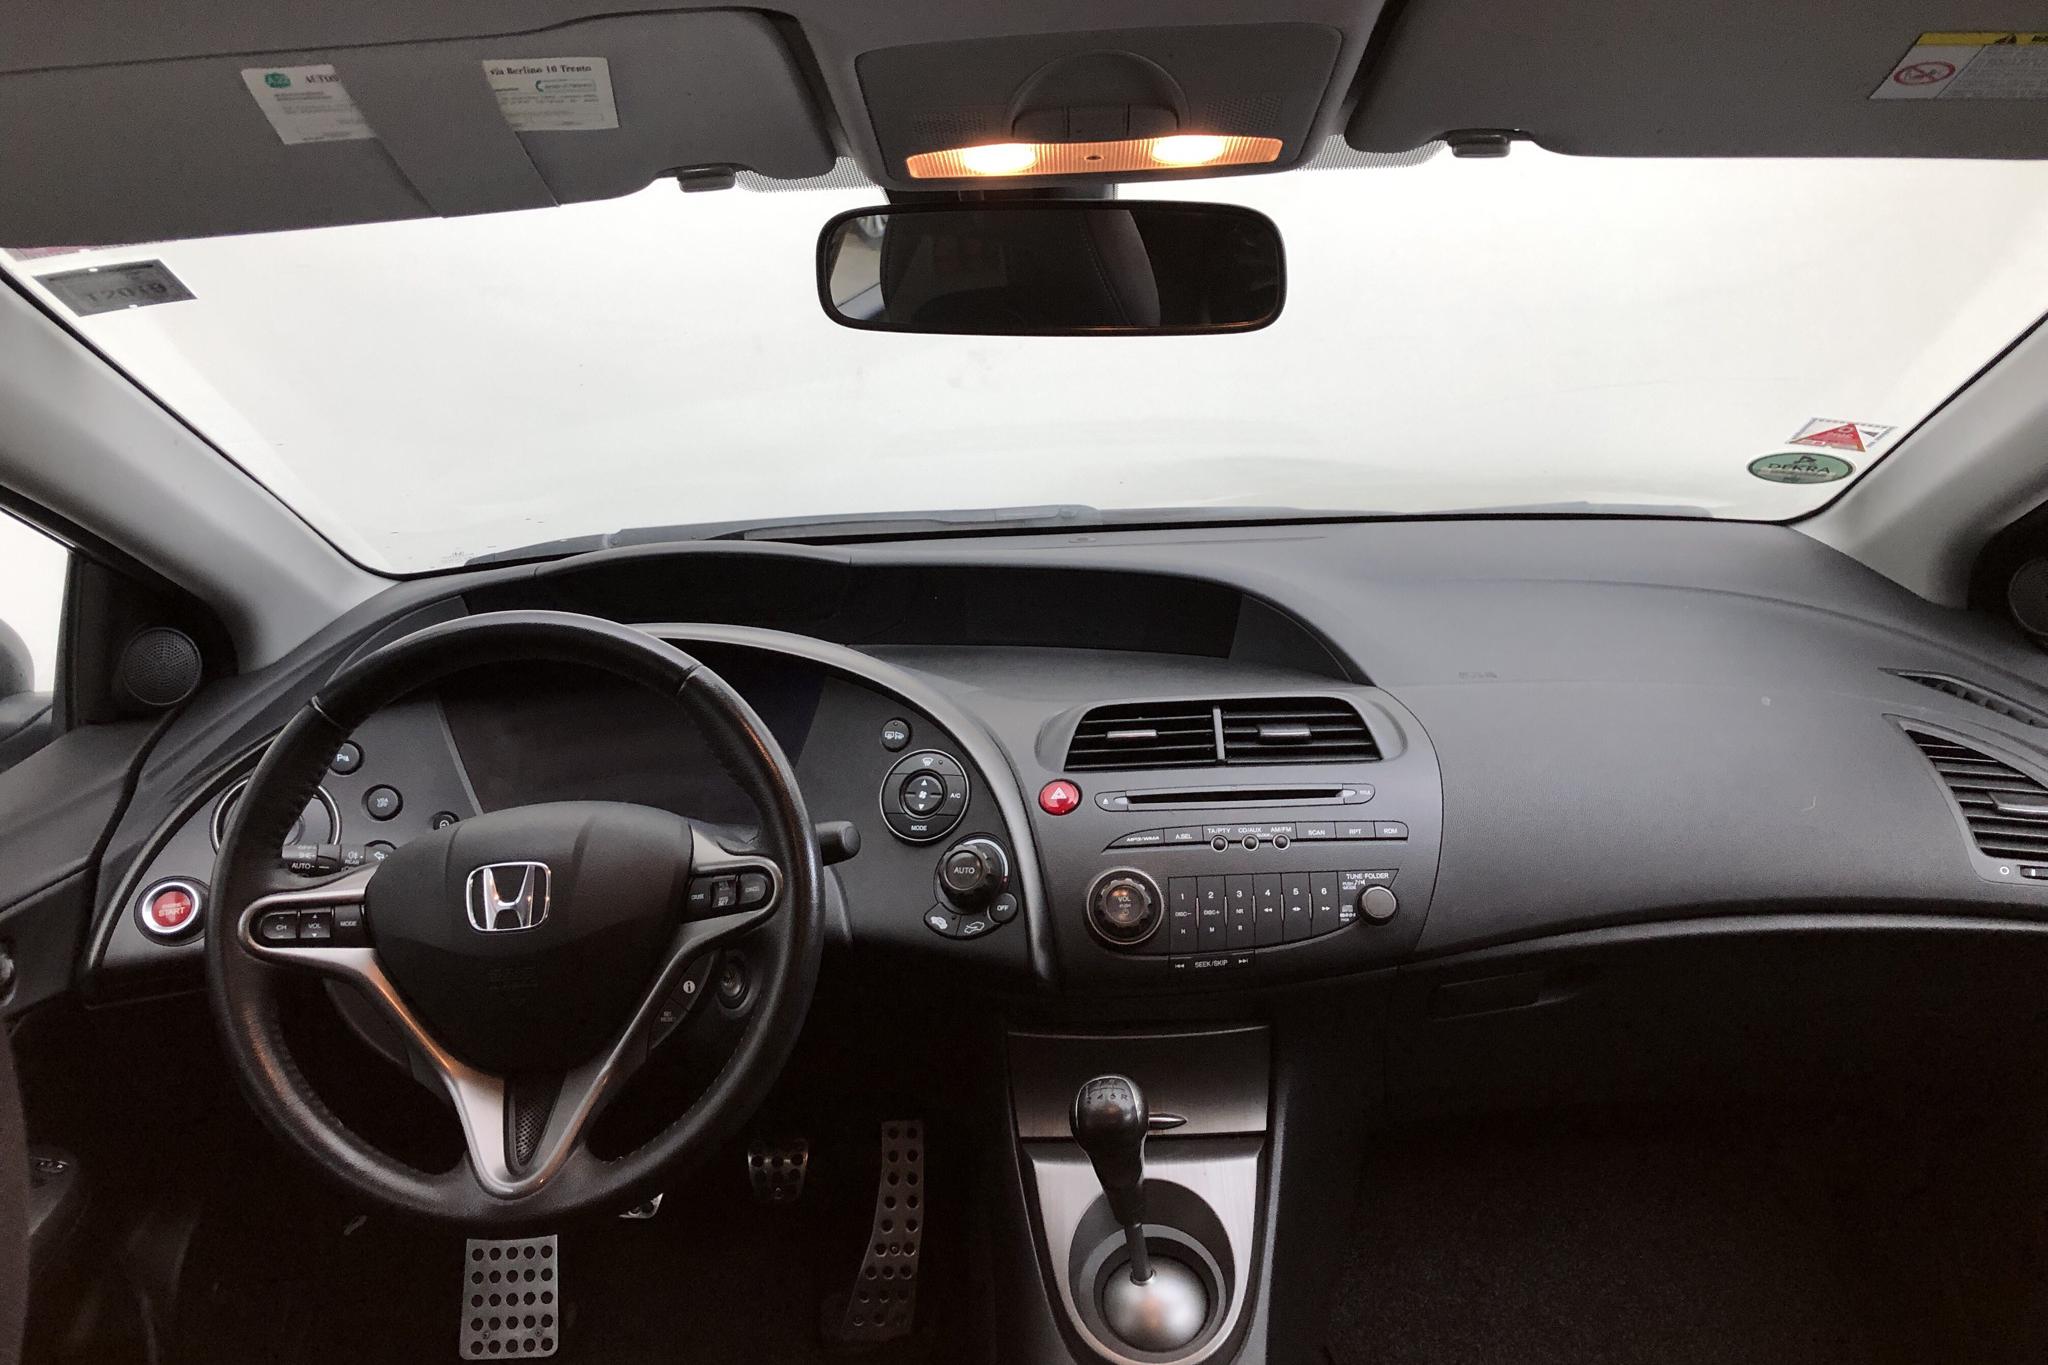 Honda Civic 1.8 5dr (140hk) - 15 648 mil - Manuell - Light Grey - 2010